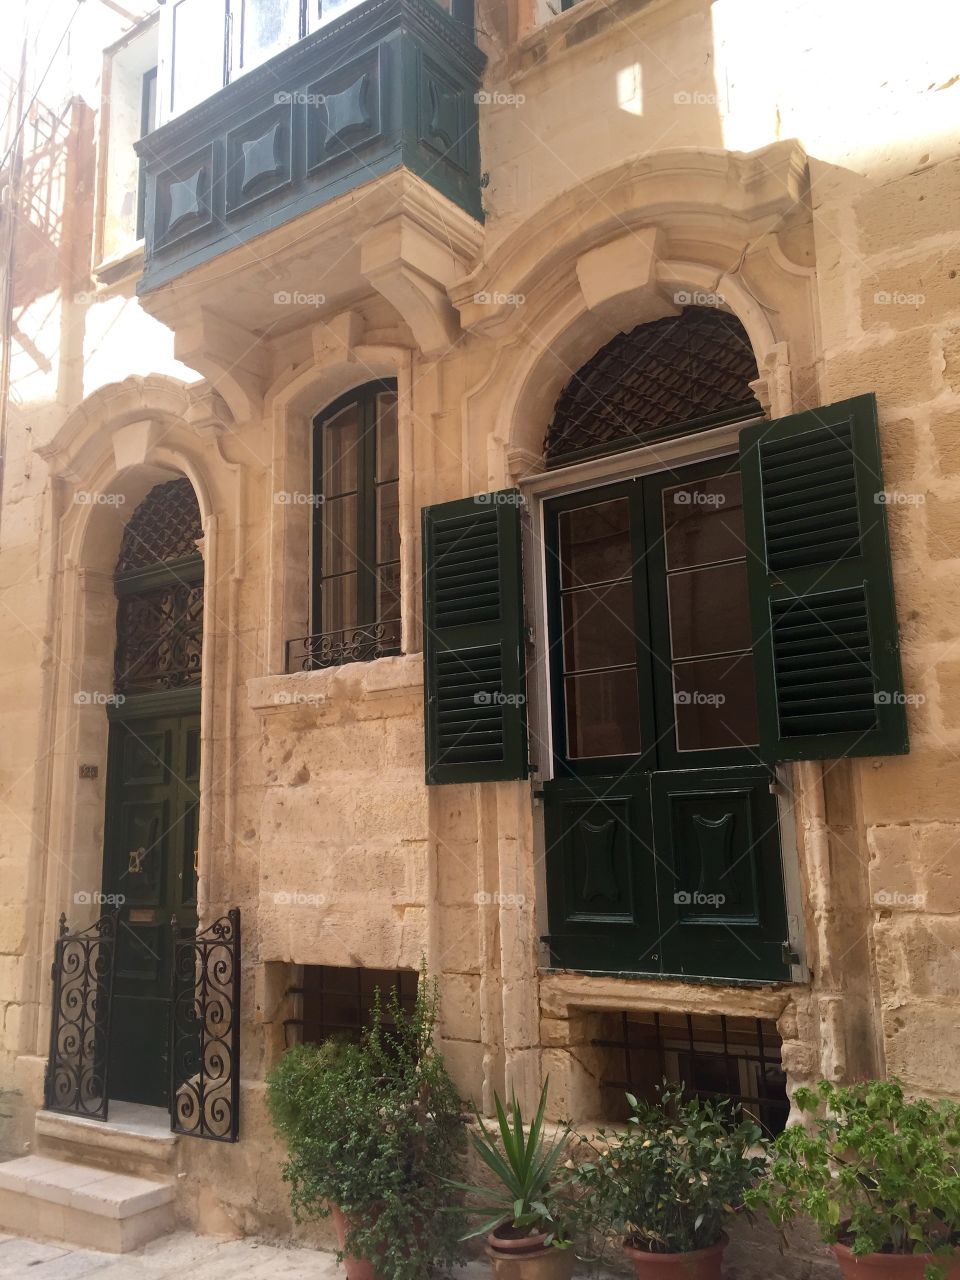 Windows around the world . Shutters around a window in the Birgu/Vittoriosa in The Three Cities area of Malta.